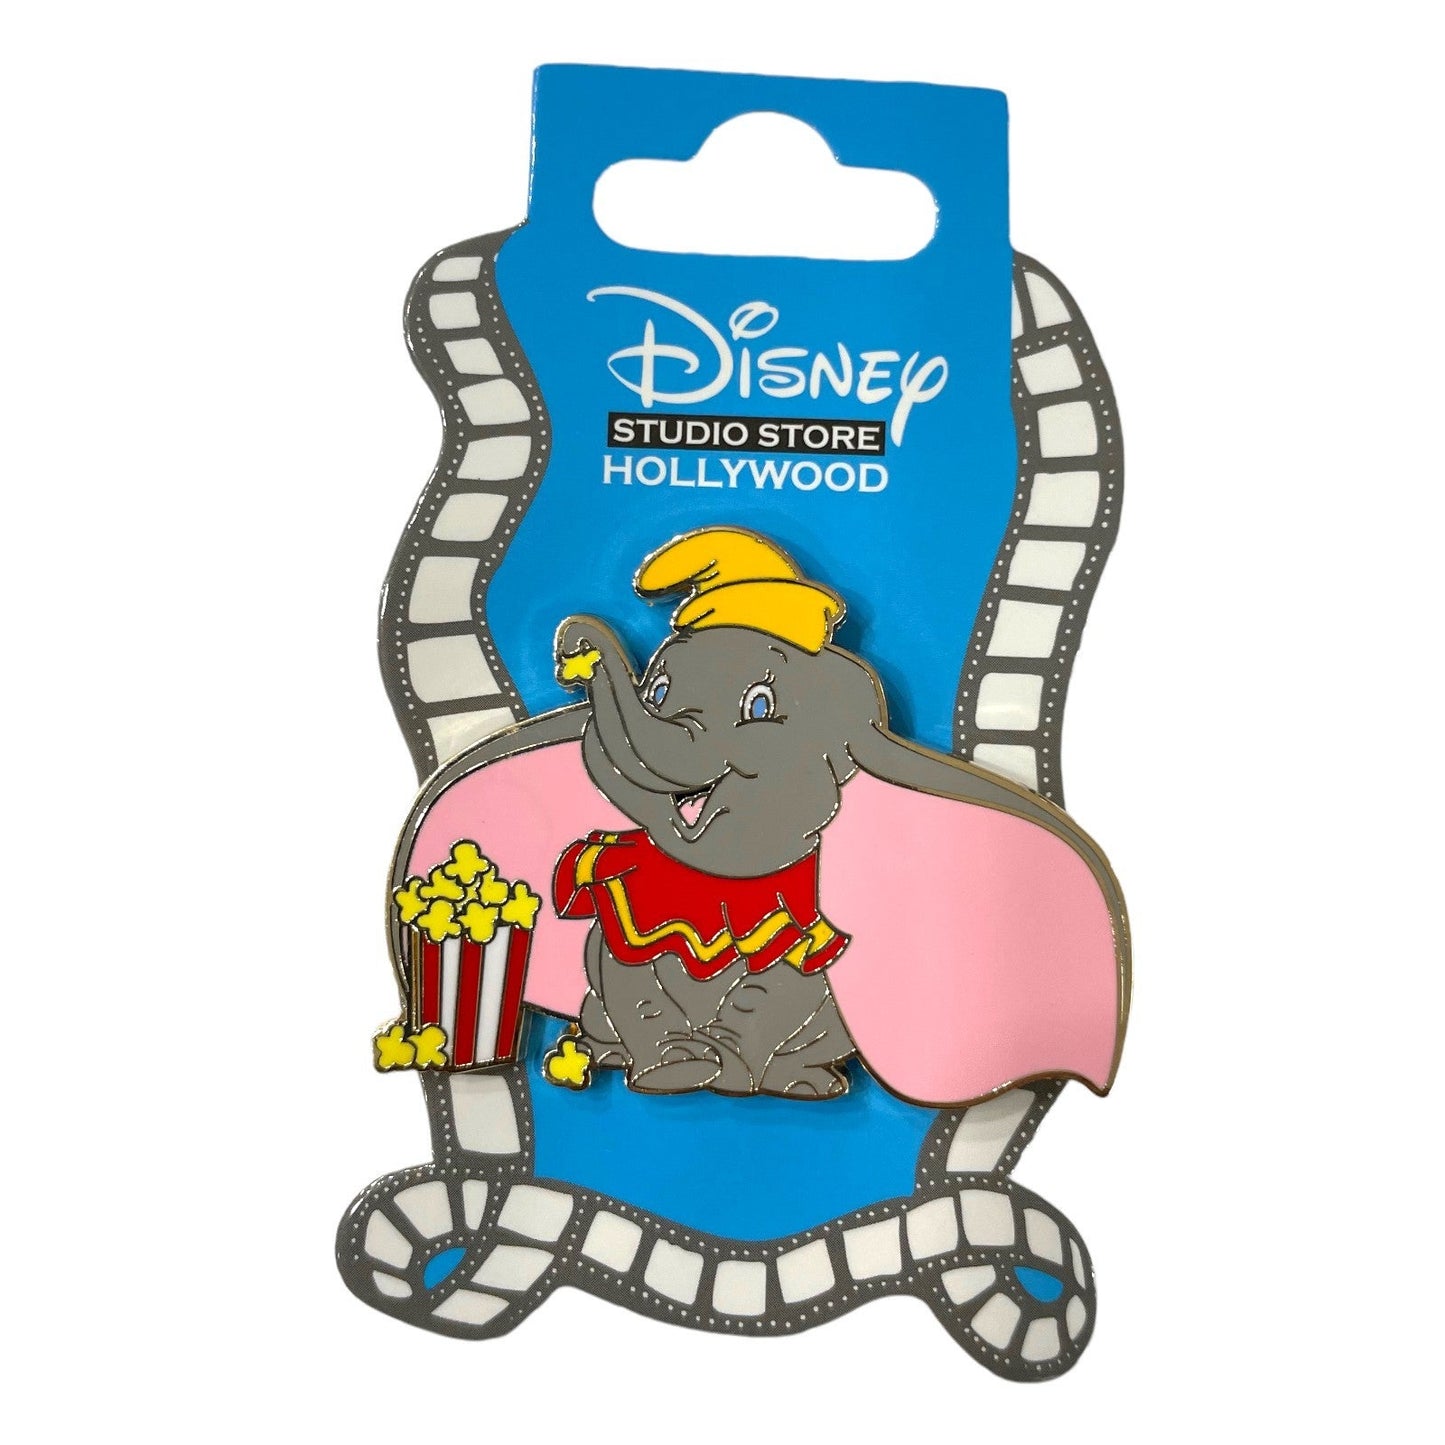 Disney Studio Store Hollywood Dumbo Pin - Popcorn Series